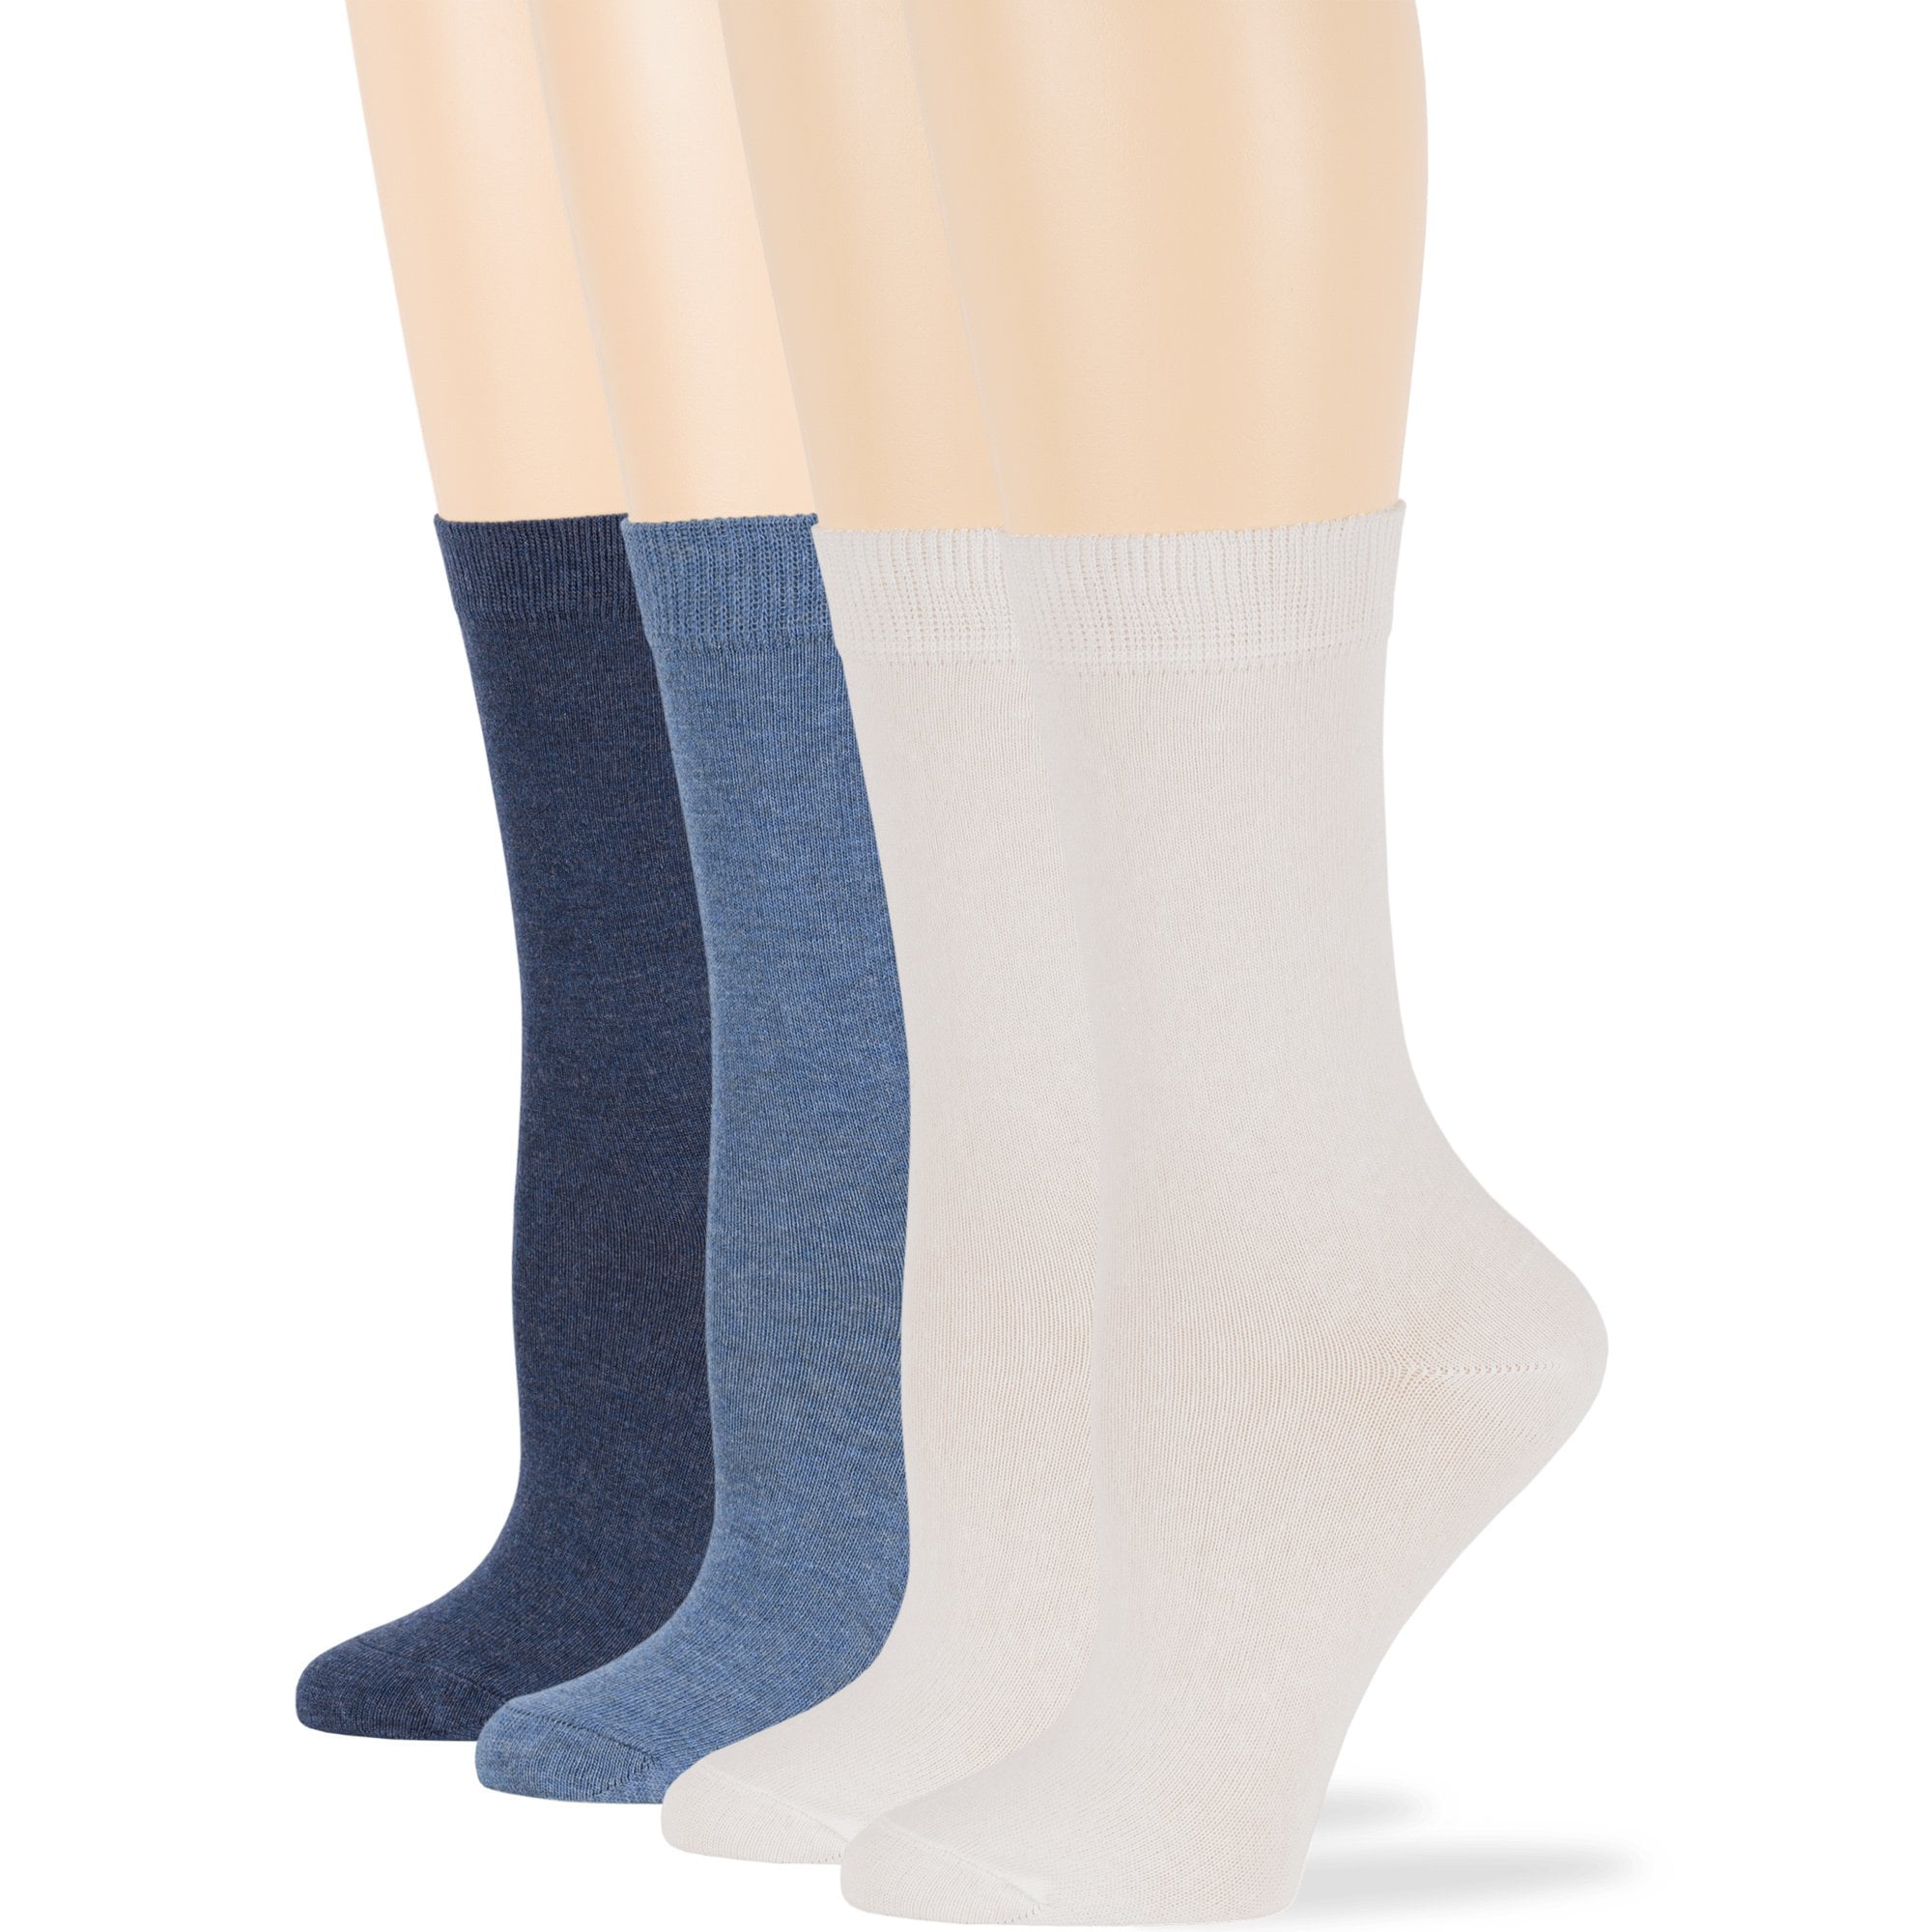 Womens Cotton Assorted Socks, Light Navy, Denim Blue, White, Medium, 4 ...